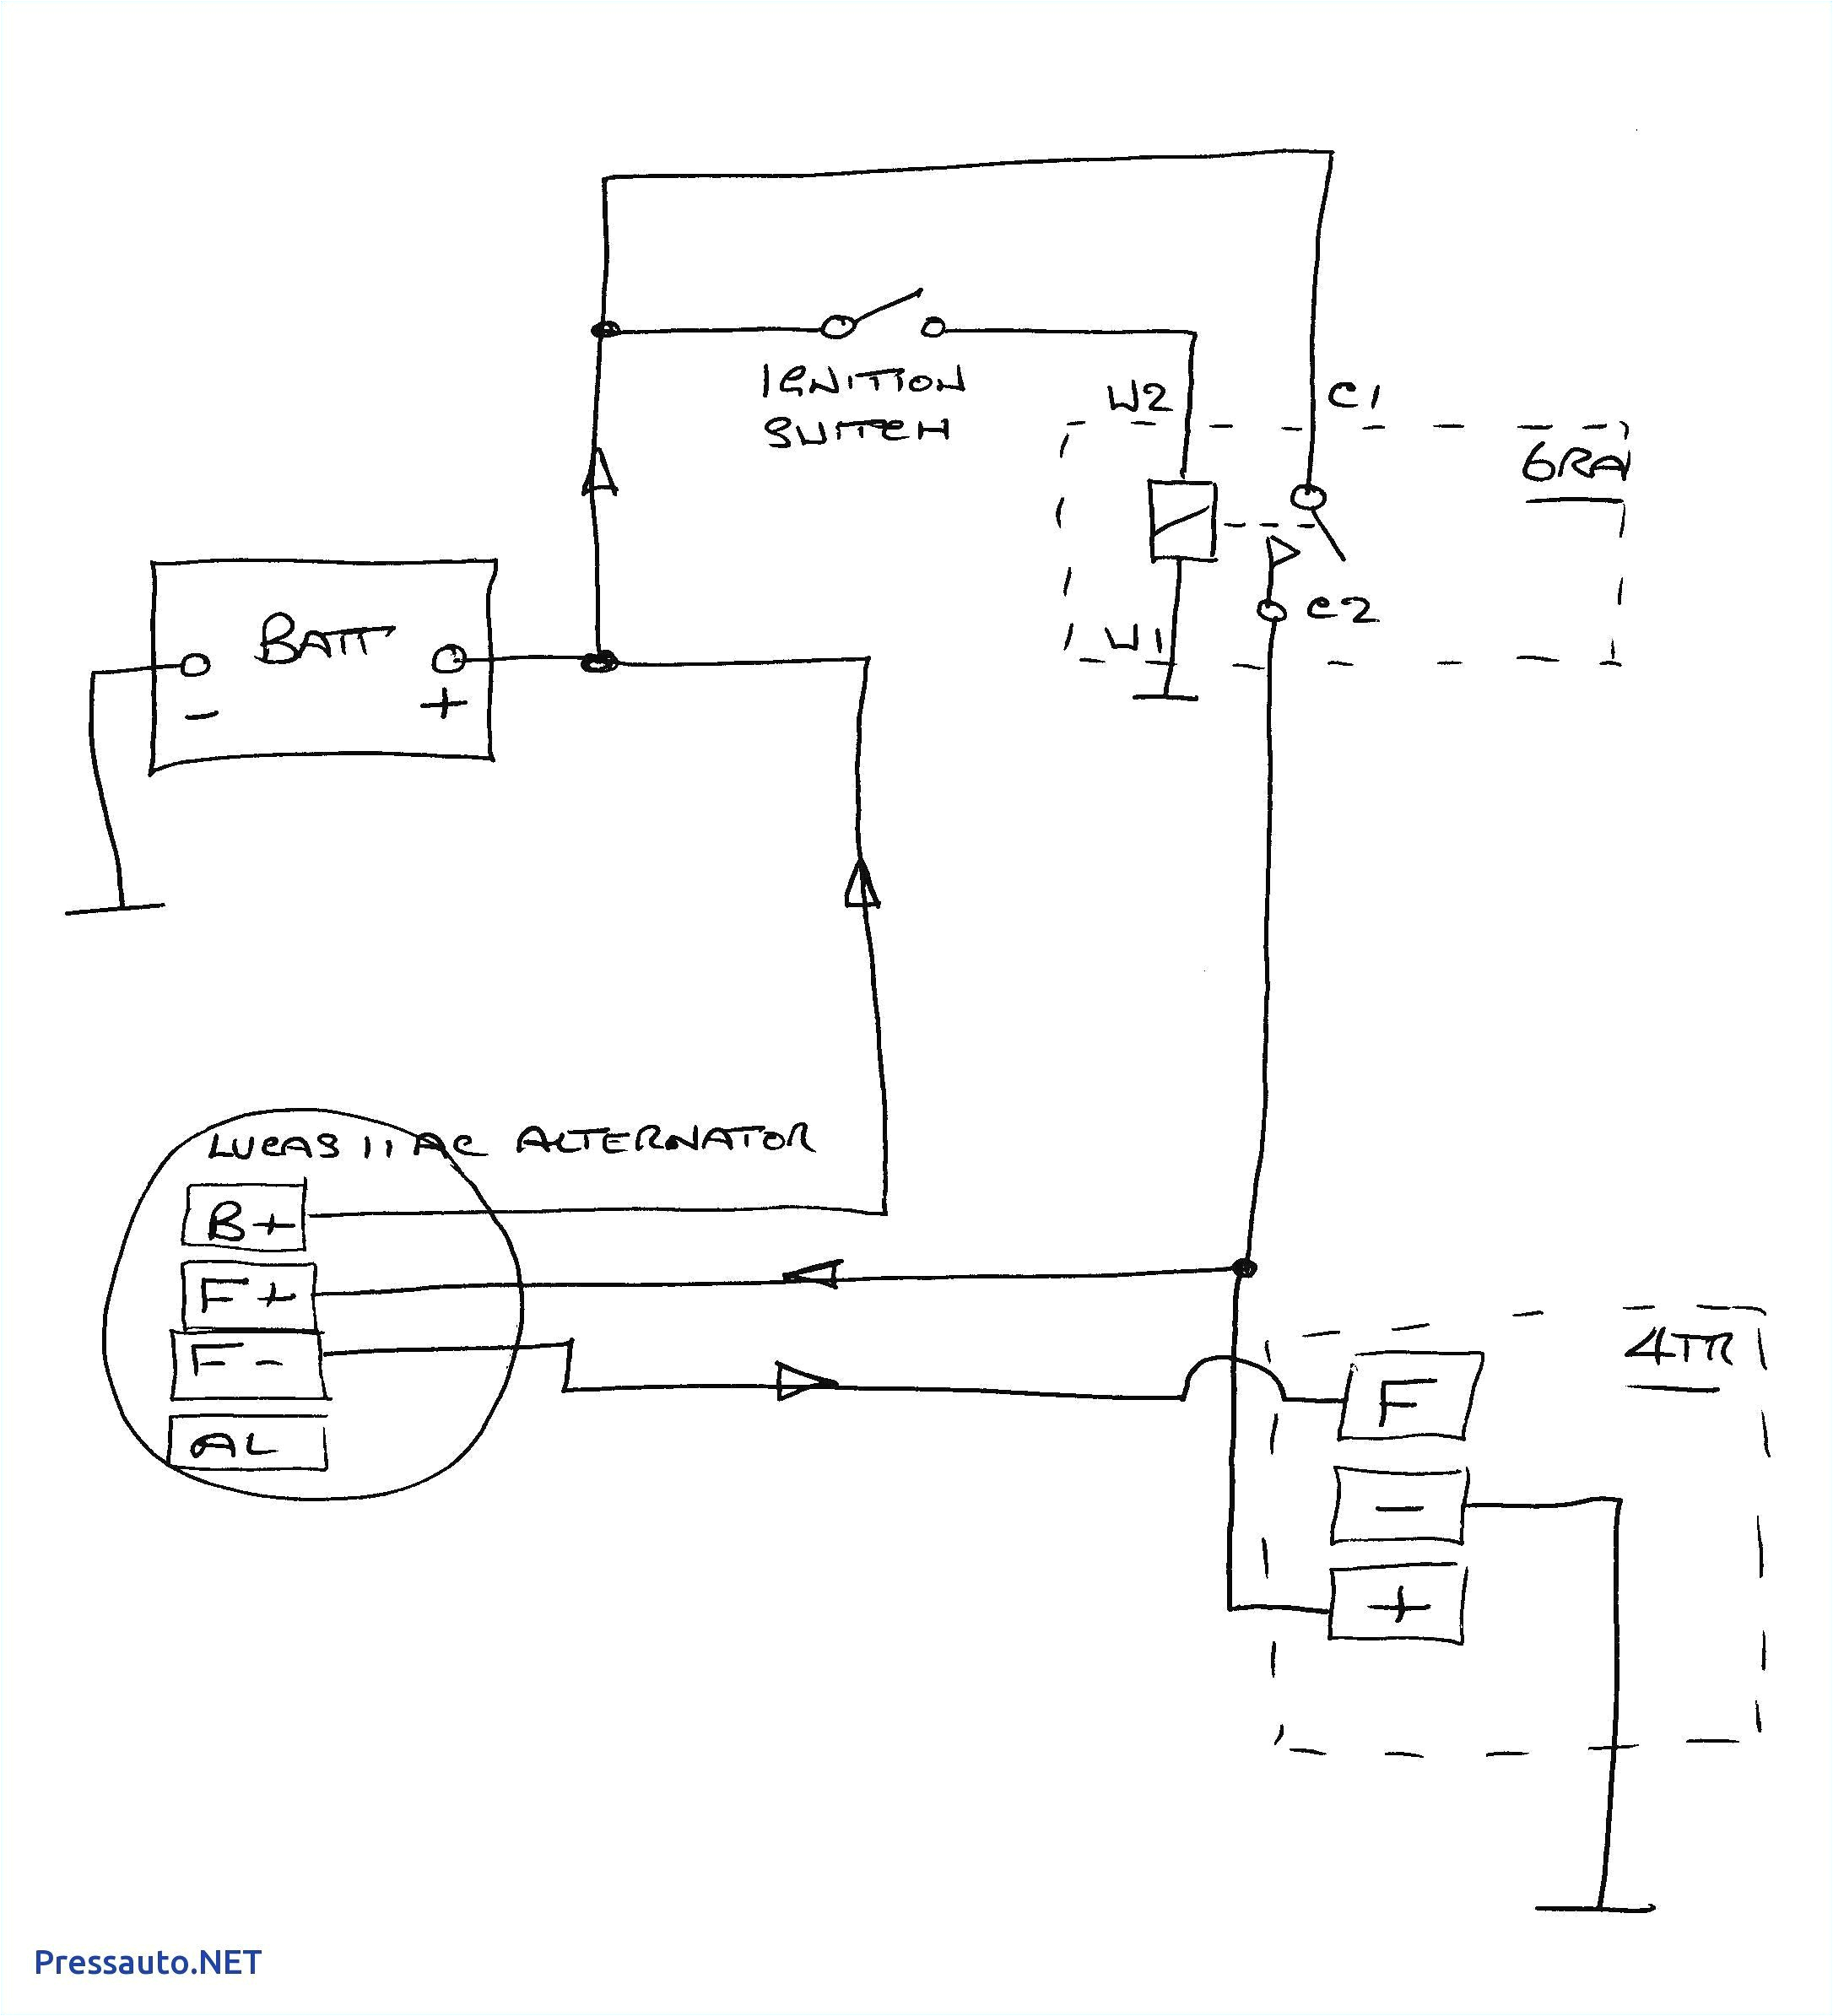 m47 wiring diagram wiring library m47 wiring diagram m37 alternator wiring diagram wiring diagram latest engine